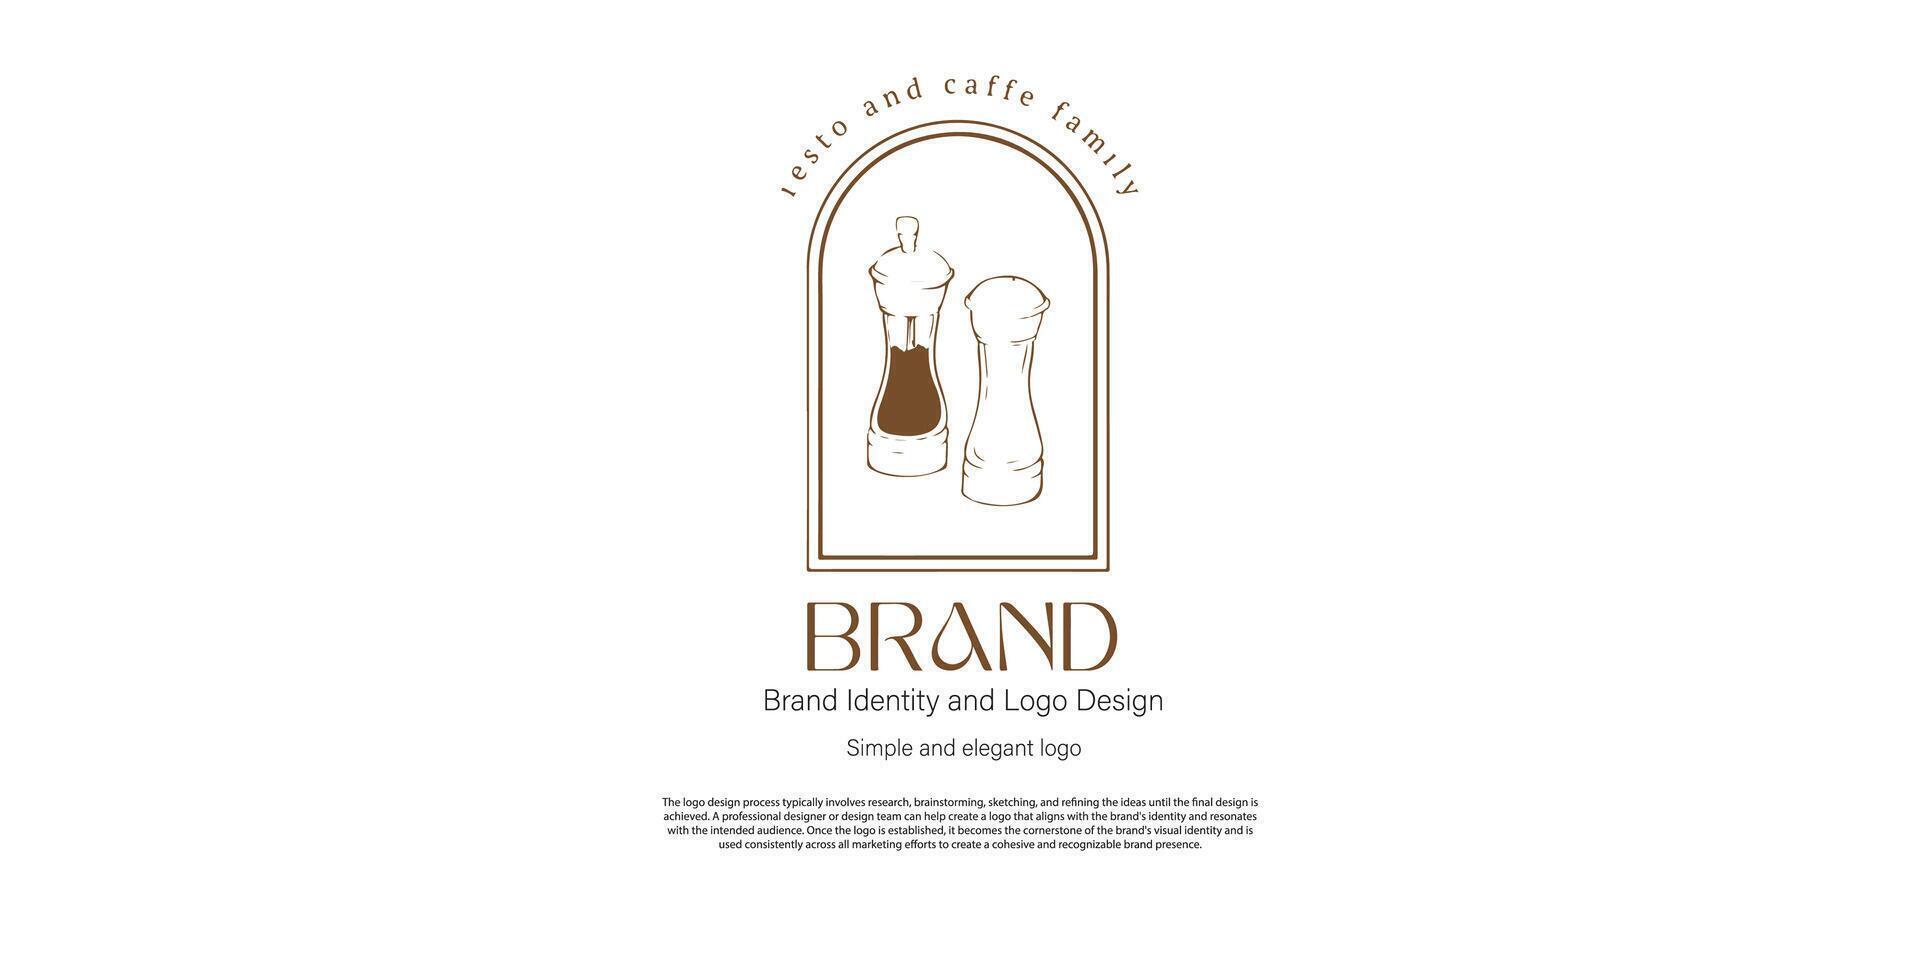 Resaturant logo design and caffe for logo designer and web developer vector